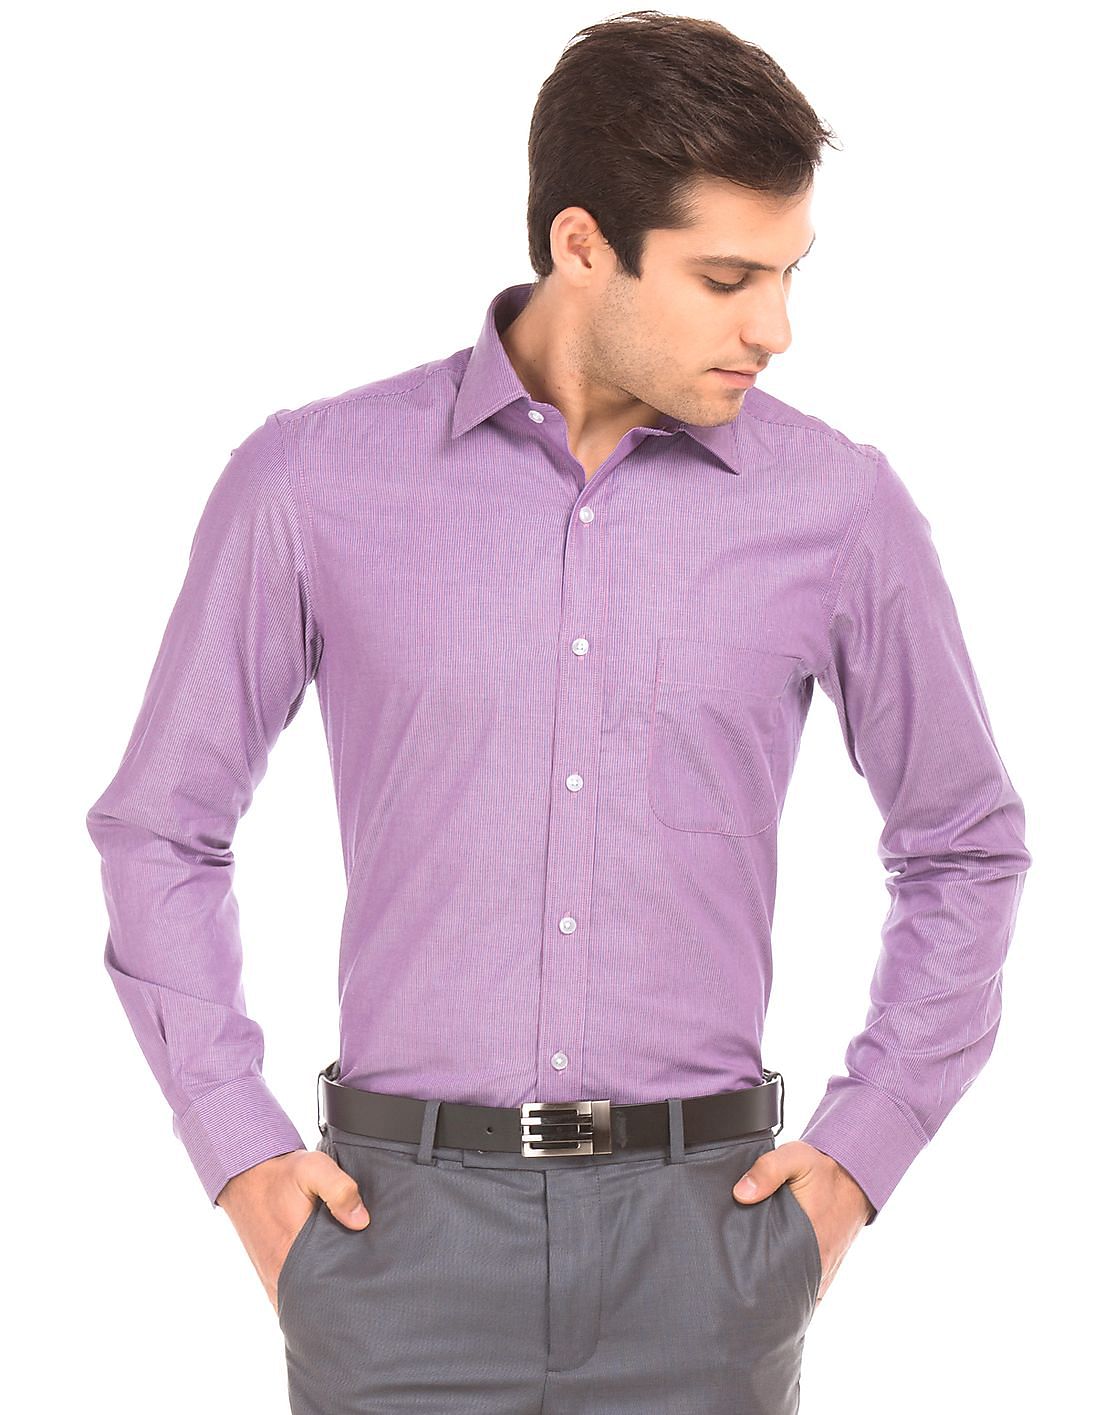 Buy Arrow Striped Regular Fit Shirt - NNNOW.com